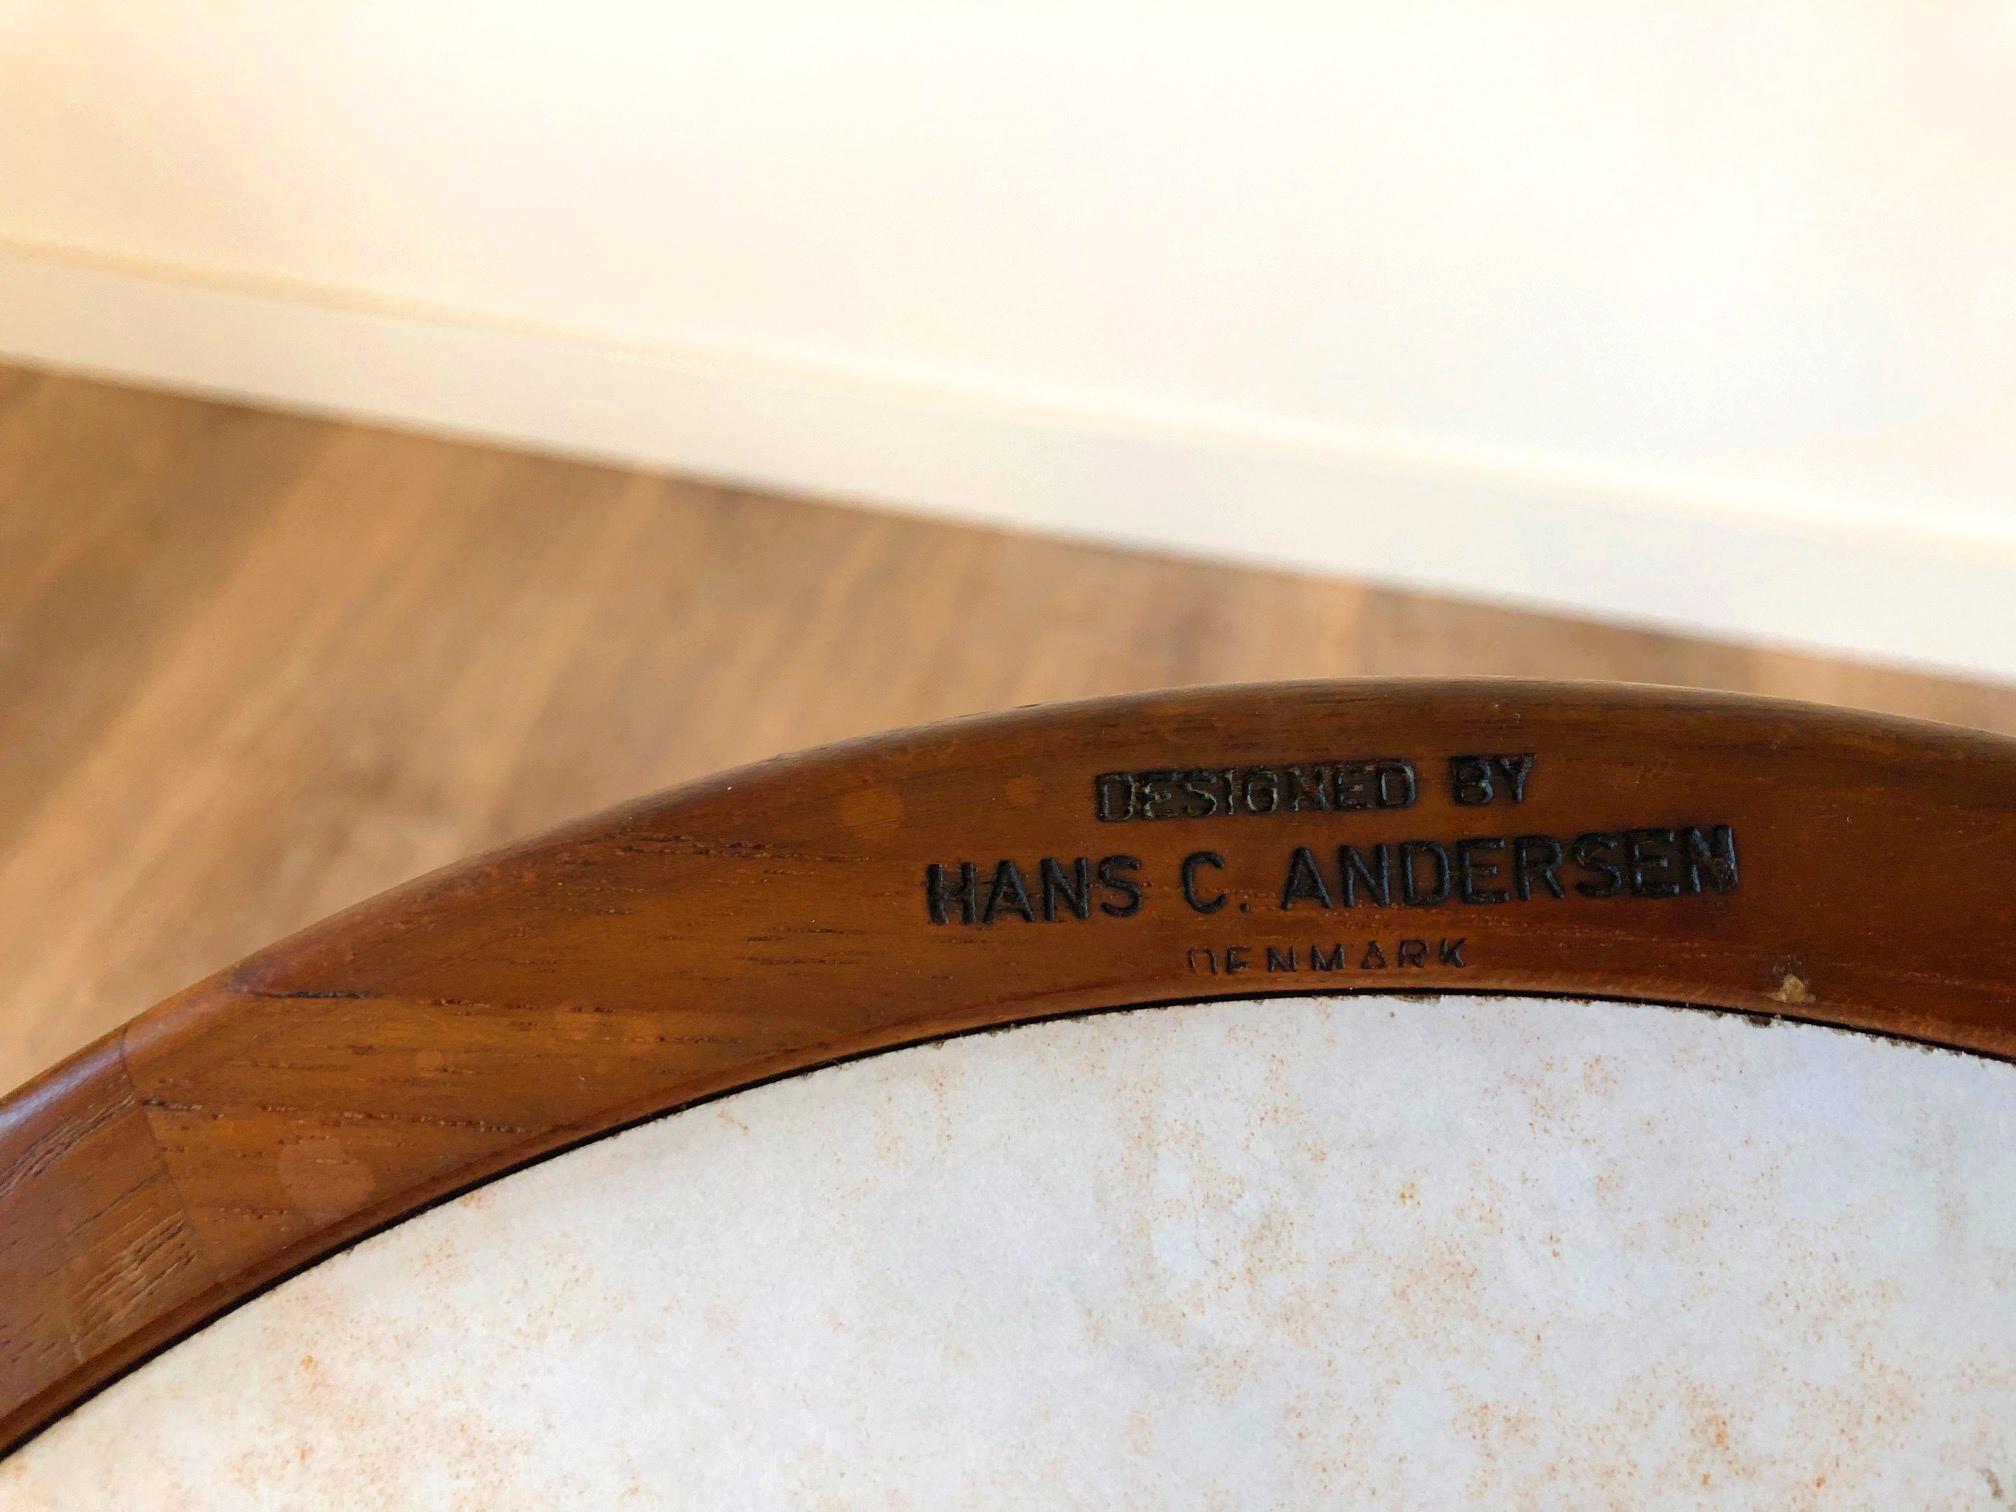 Hans Andersen Pedestal Table